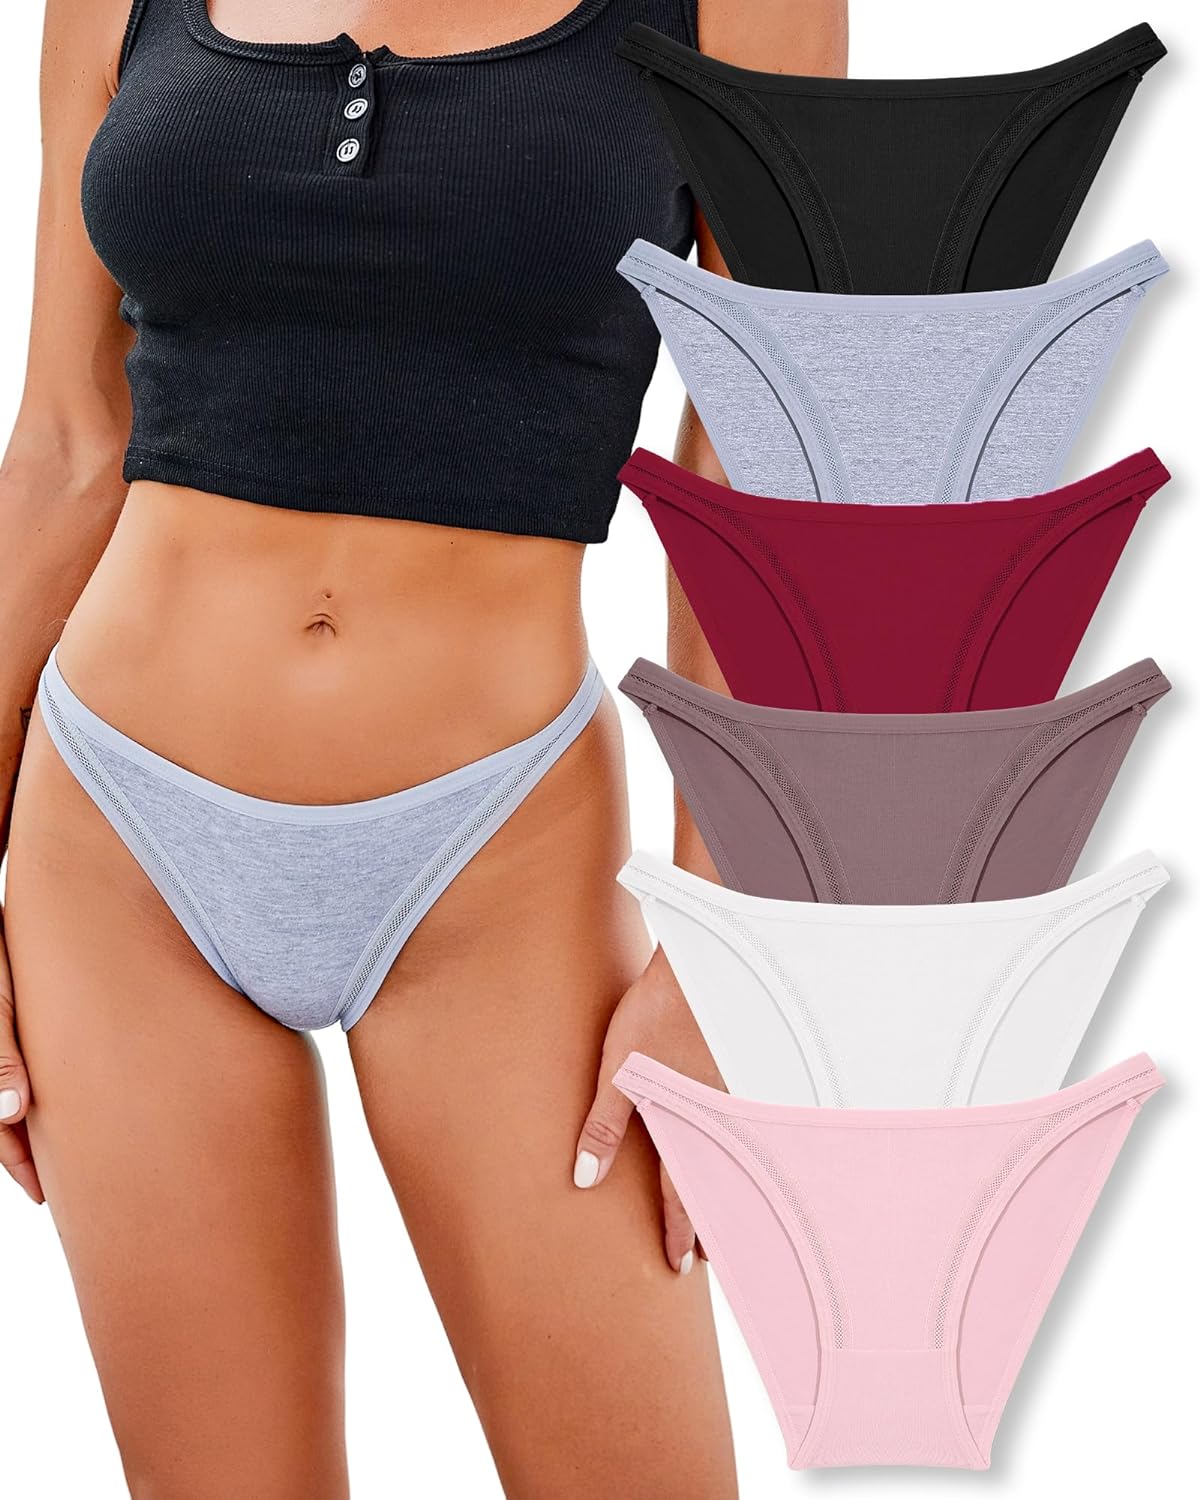 ANZERMIX Women's Breathable Cotton Bikini Panties Pack of 6 (6